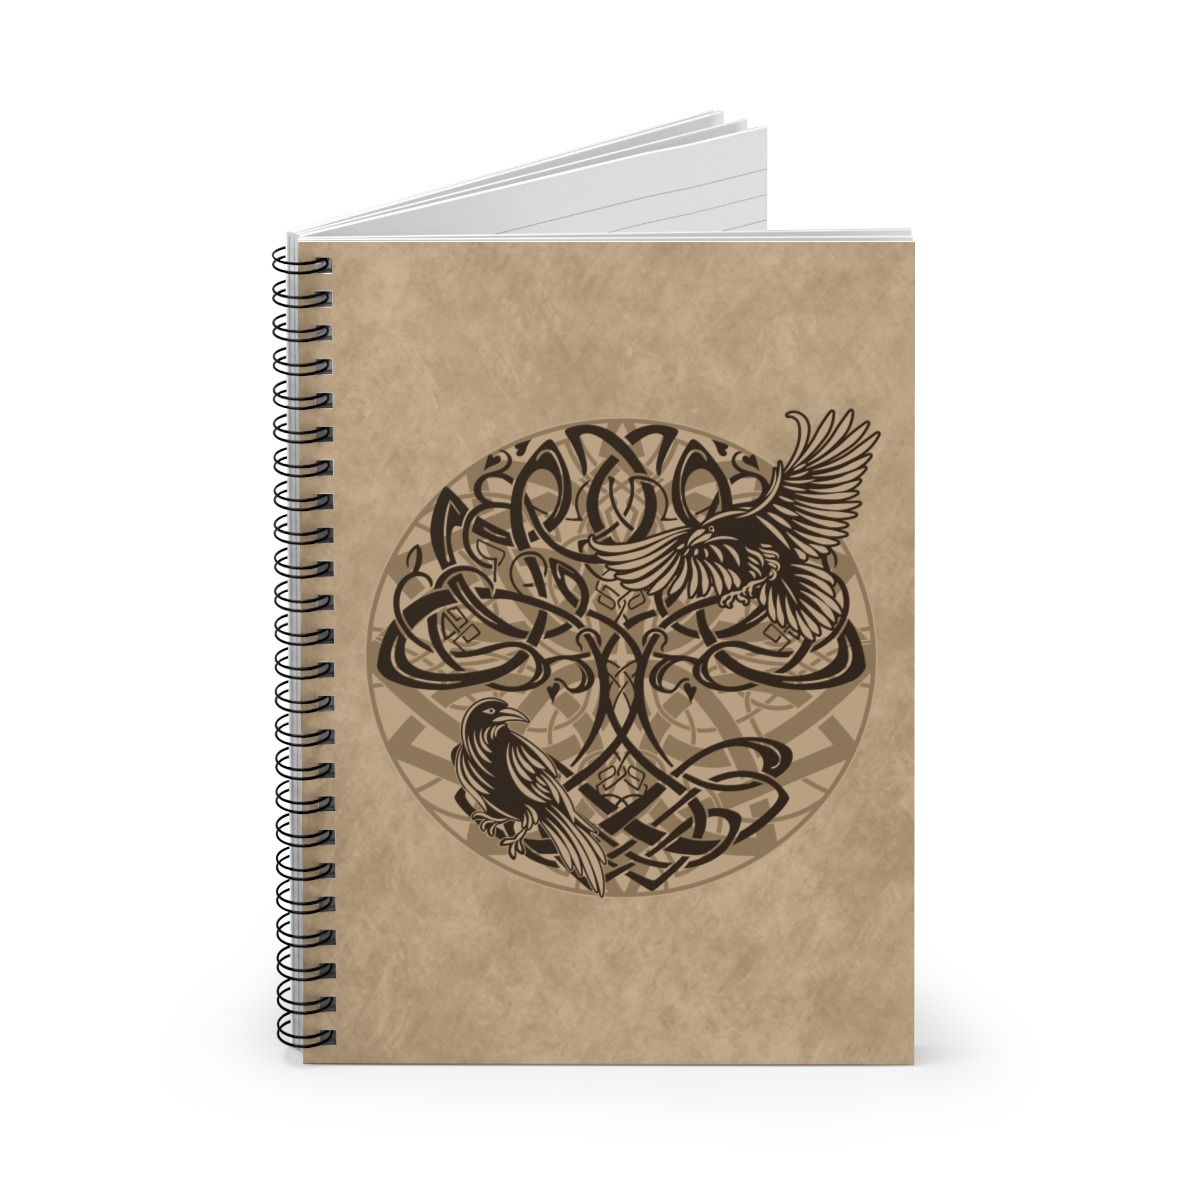 Gold Yggdrasil Ravens Ruled Line Spiral Notebook